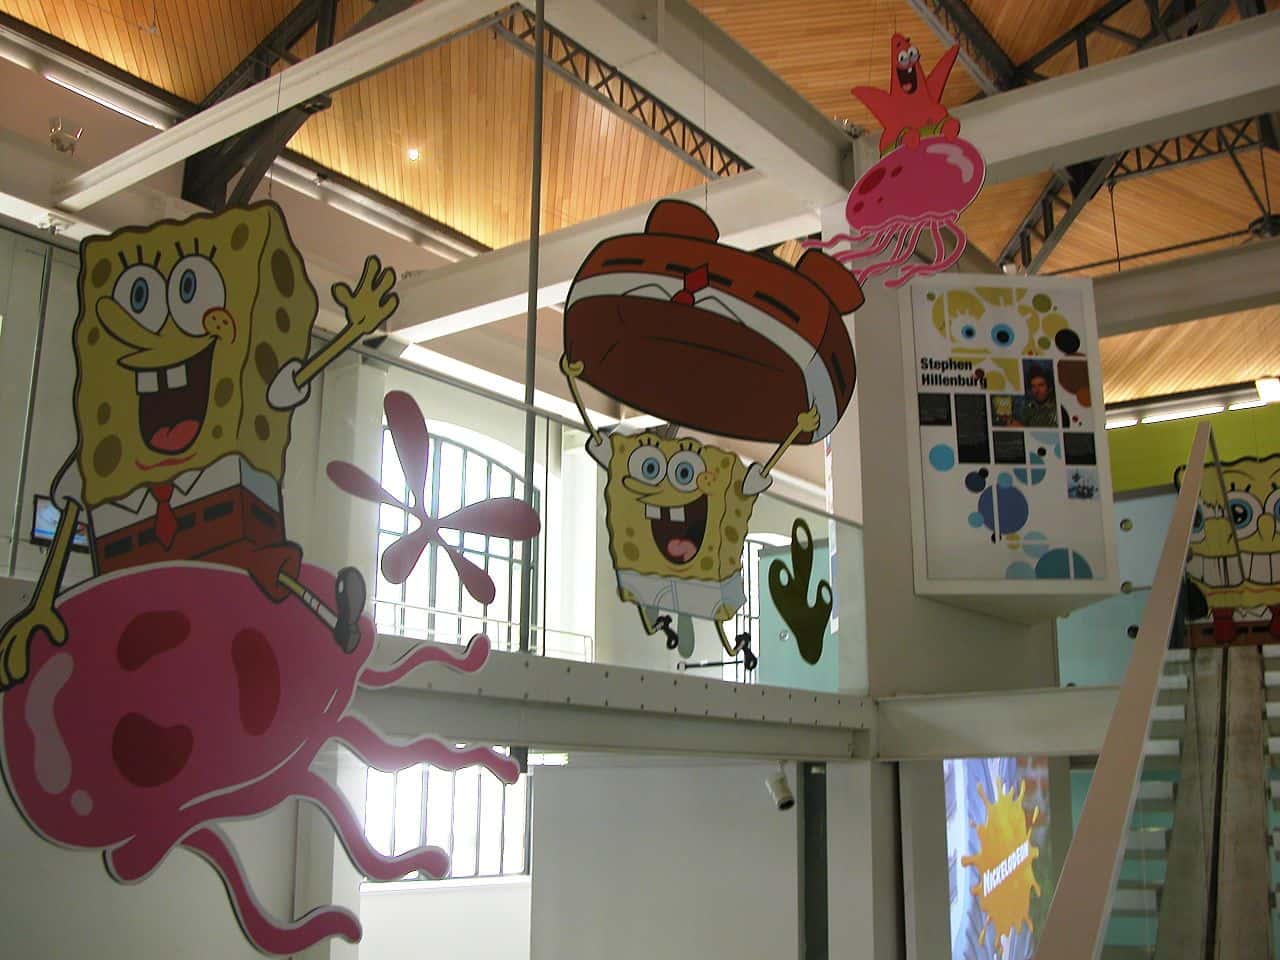 Spongebob Squarepants Facts